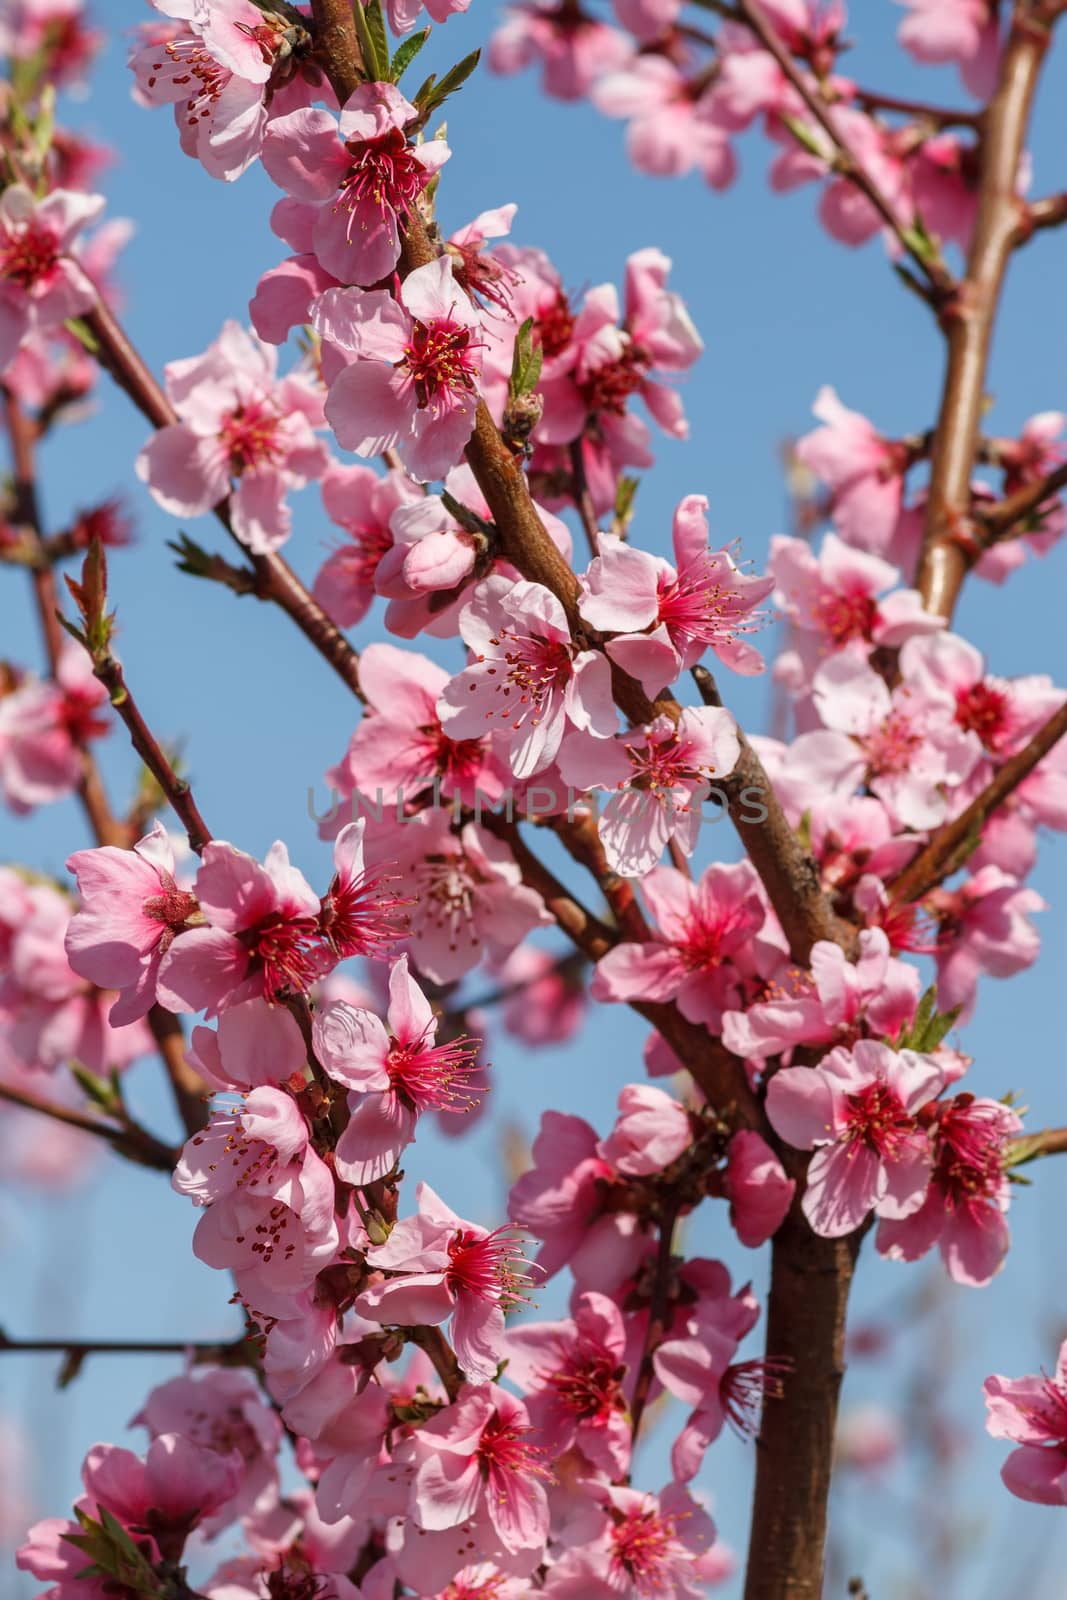 Peach blossoms close-up against the blue sky